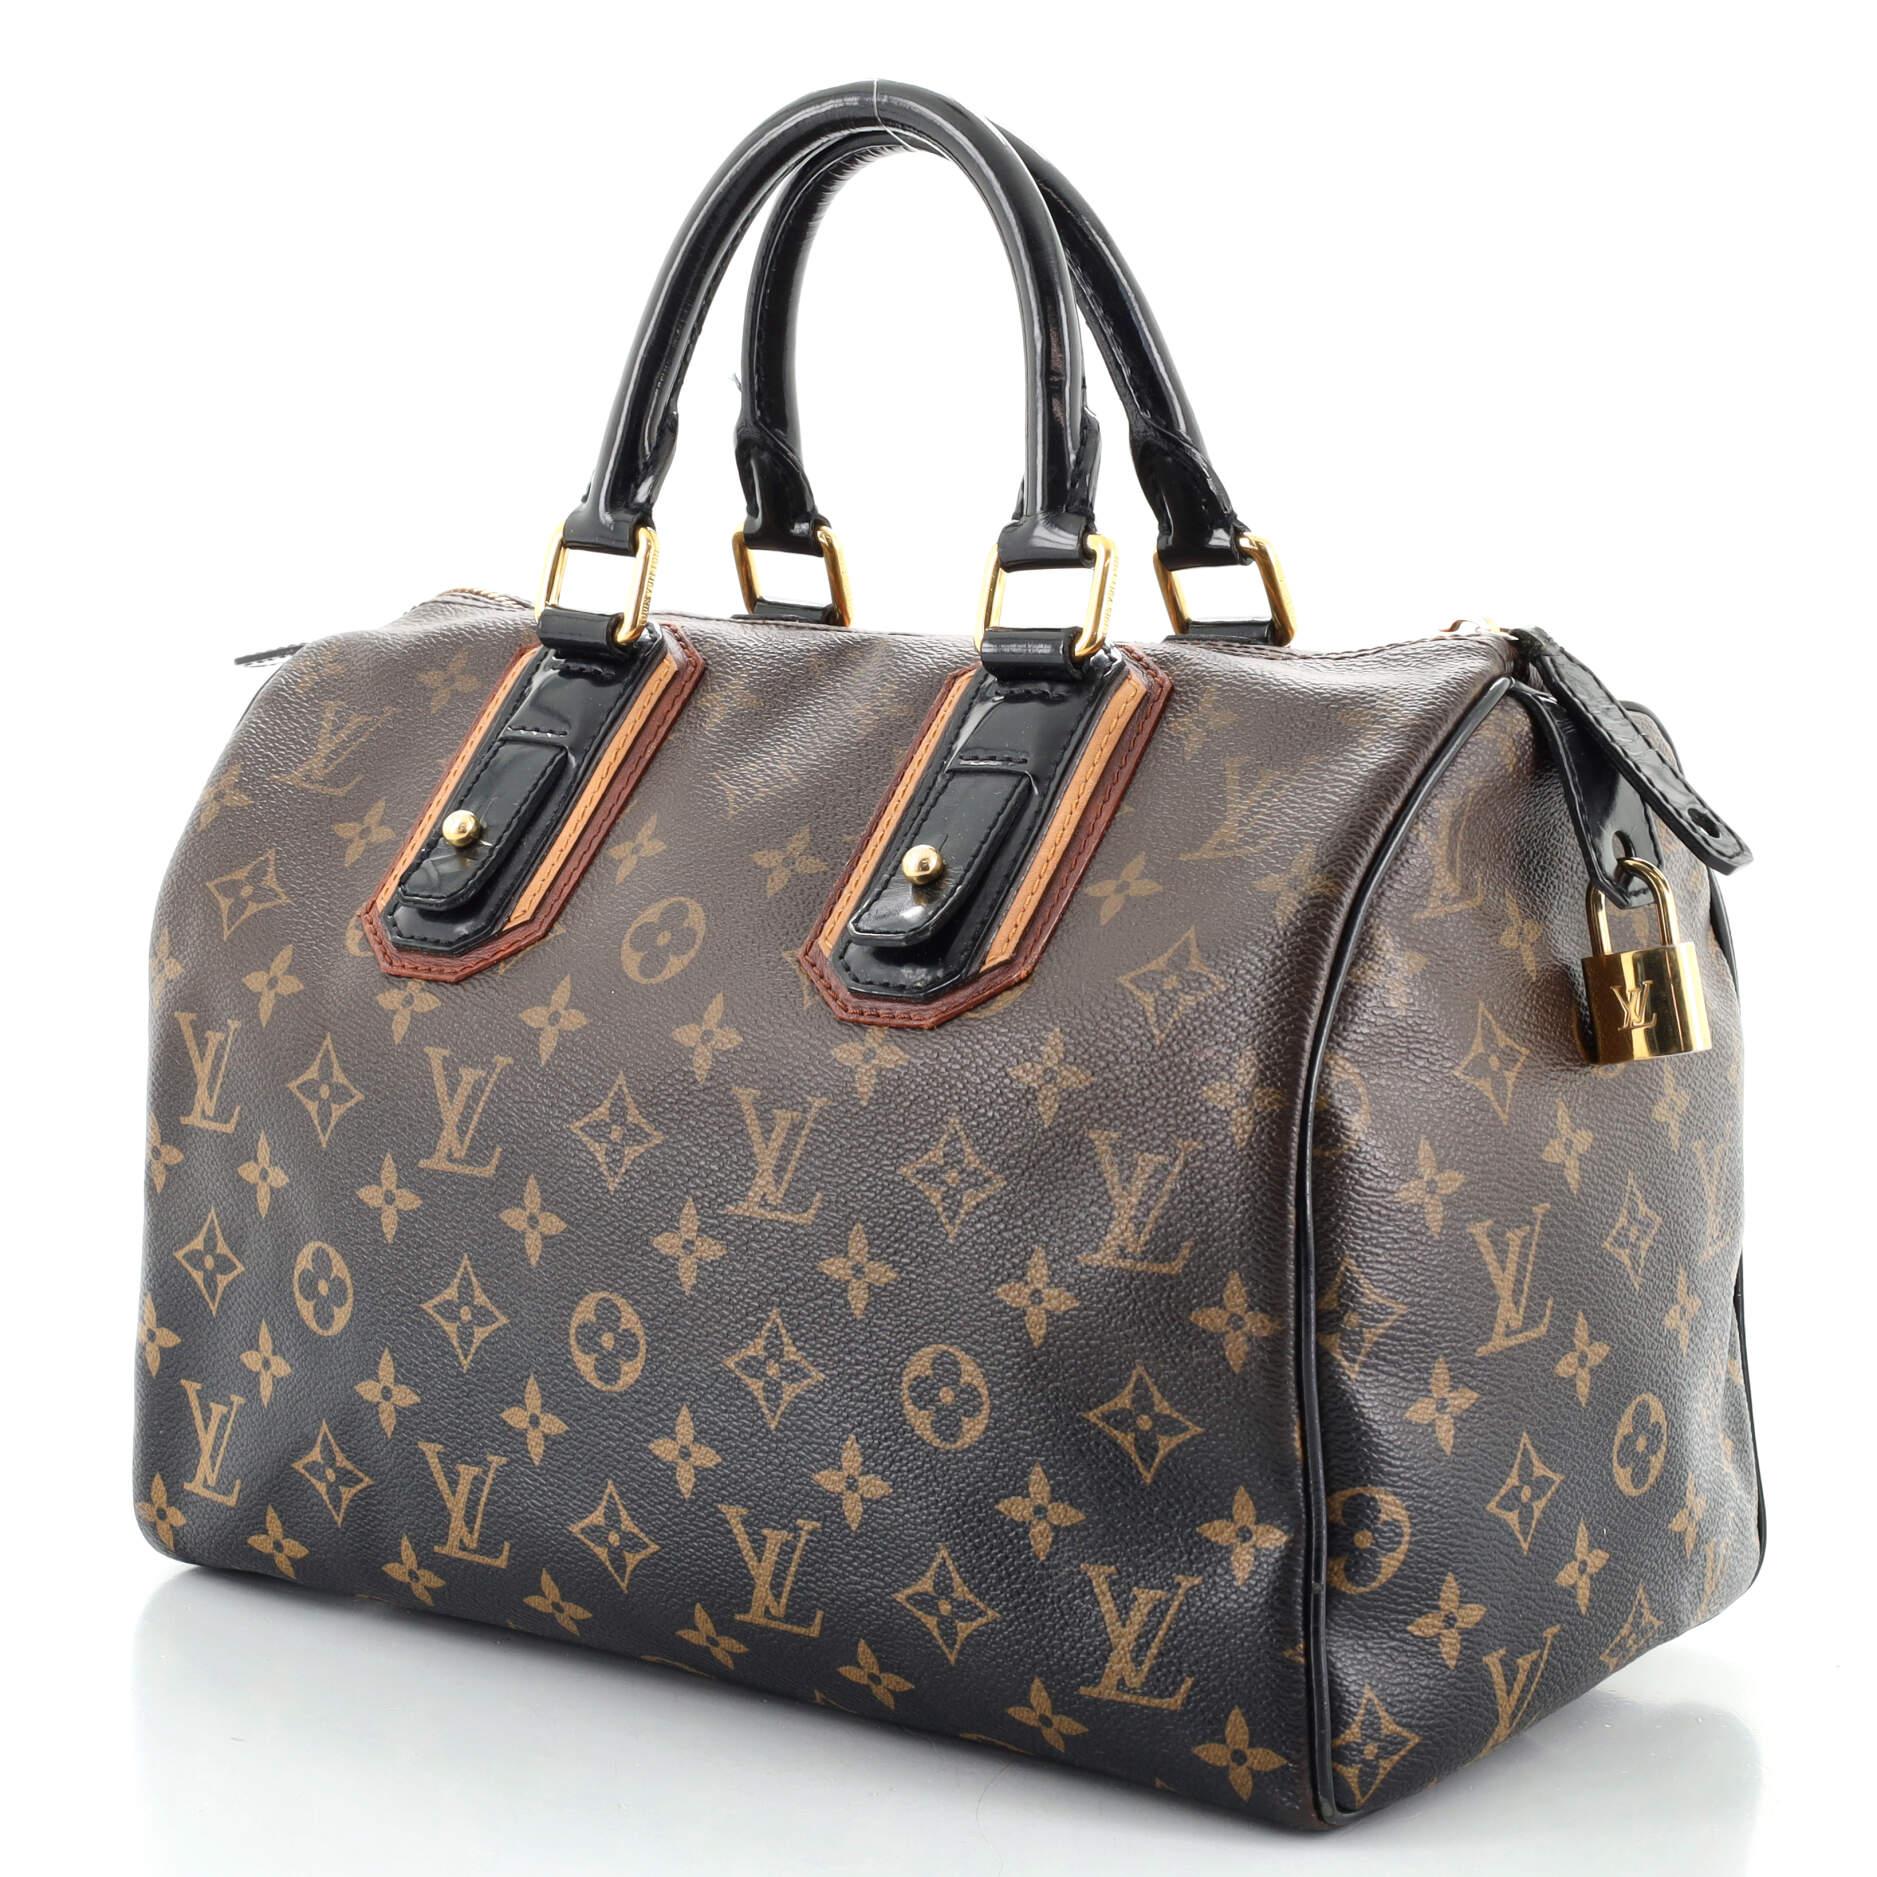 Black Louis Vuitton Speedy Handbag Limited Edition Monogram Mirage 30